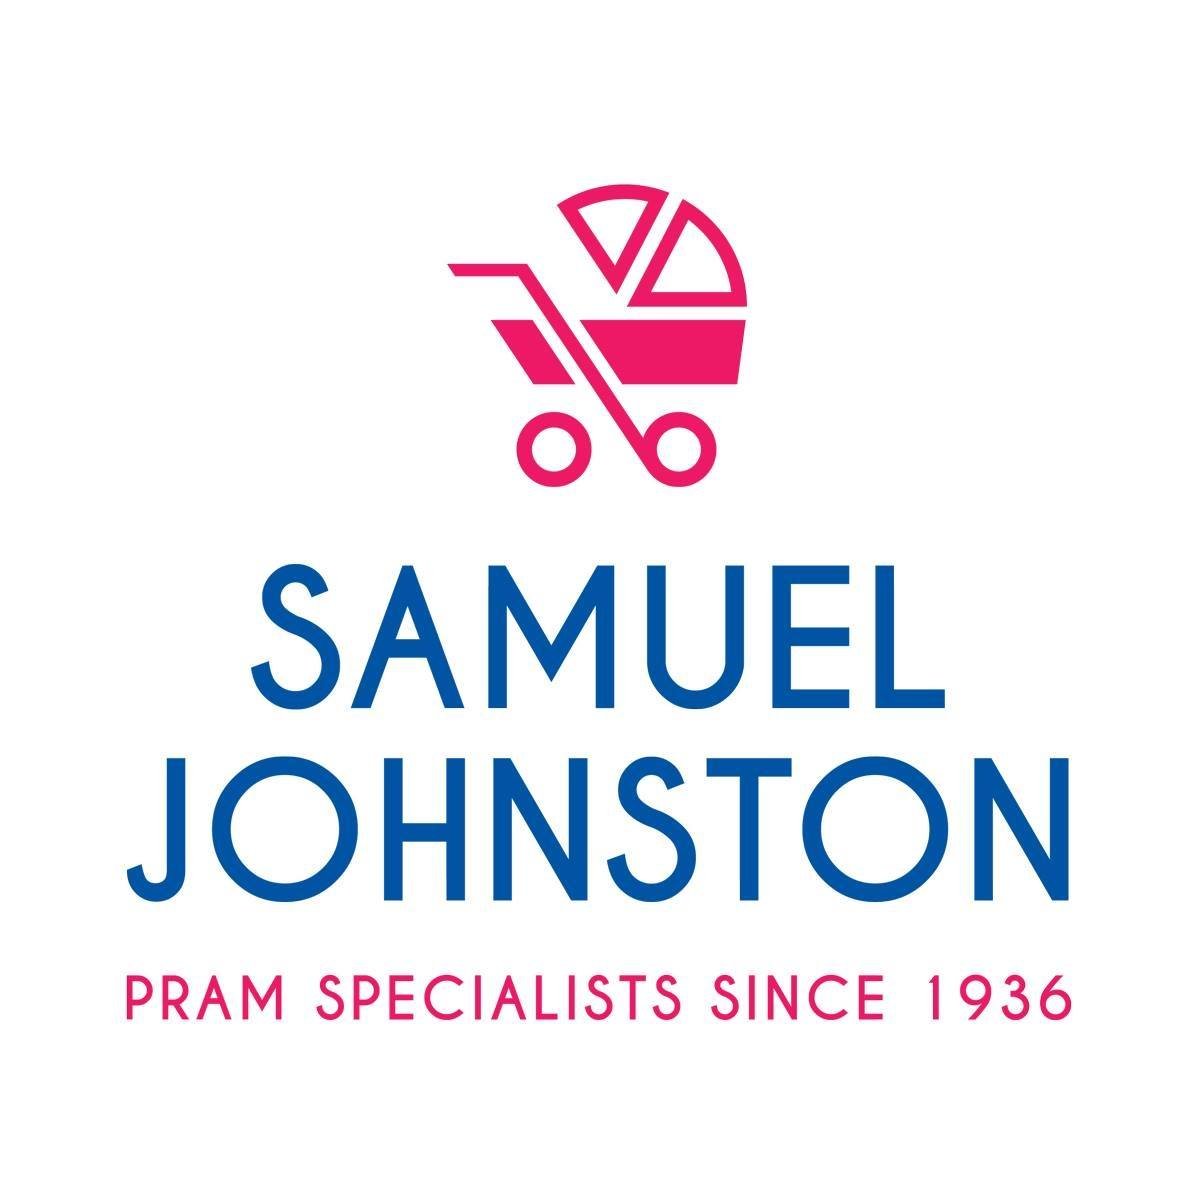 Samuel johnston.com